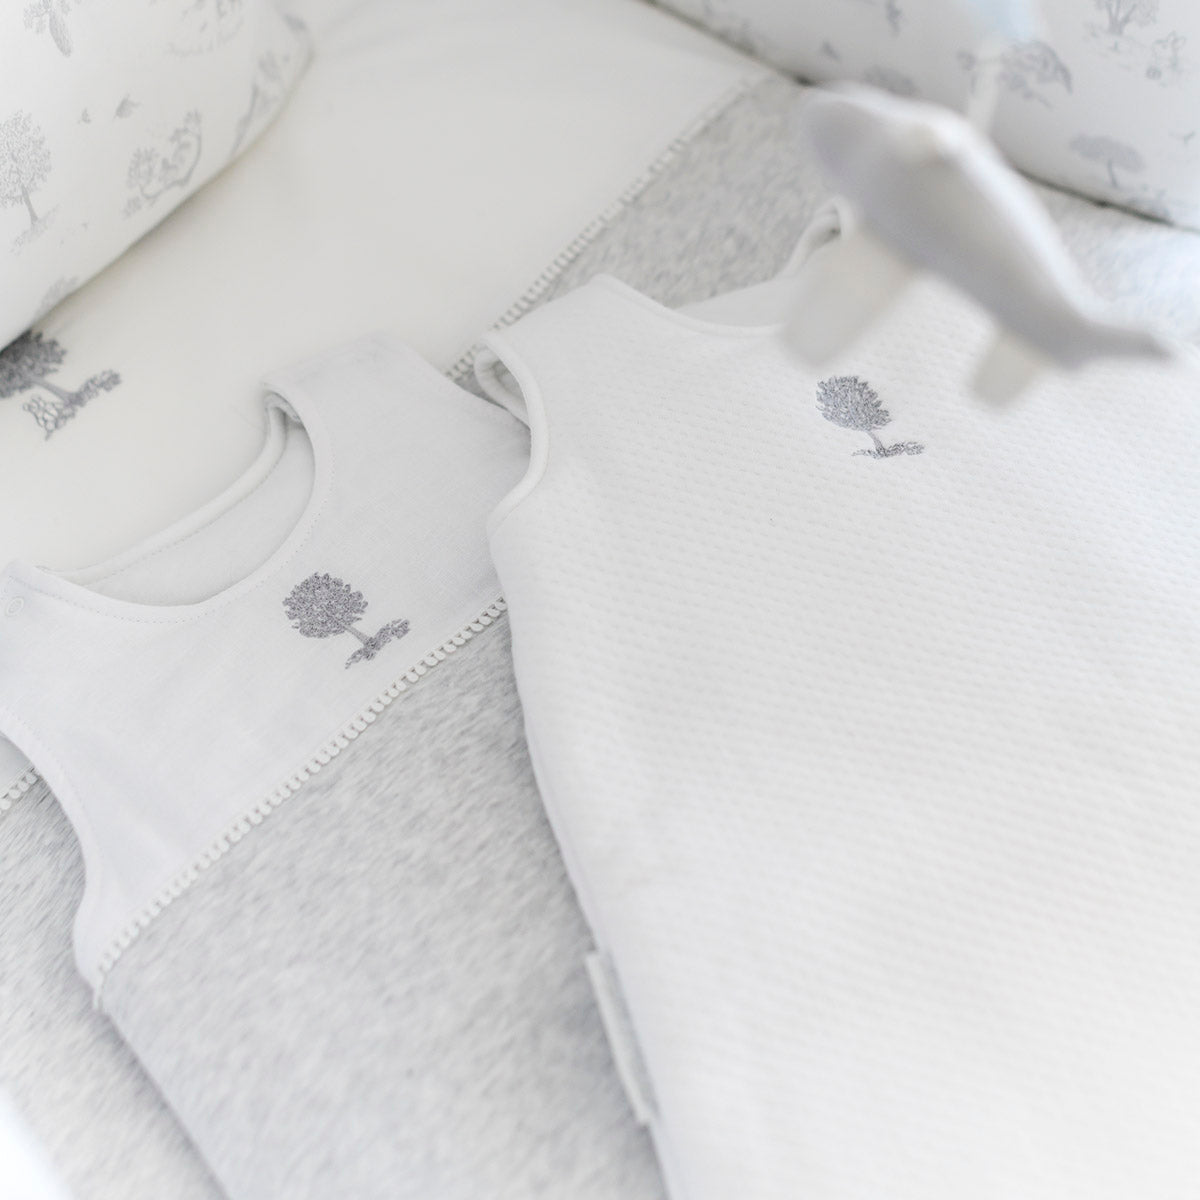 Theophile & Patachou Baby Sleeping Bag 70 cm - Grey / White